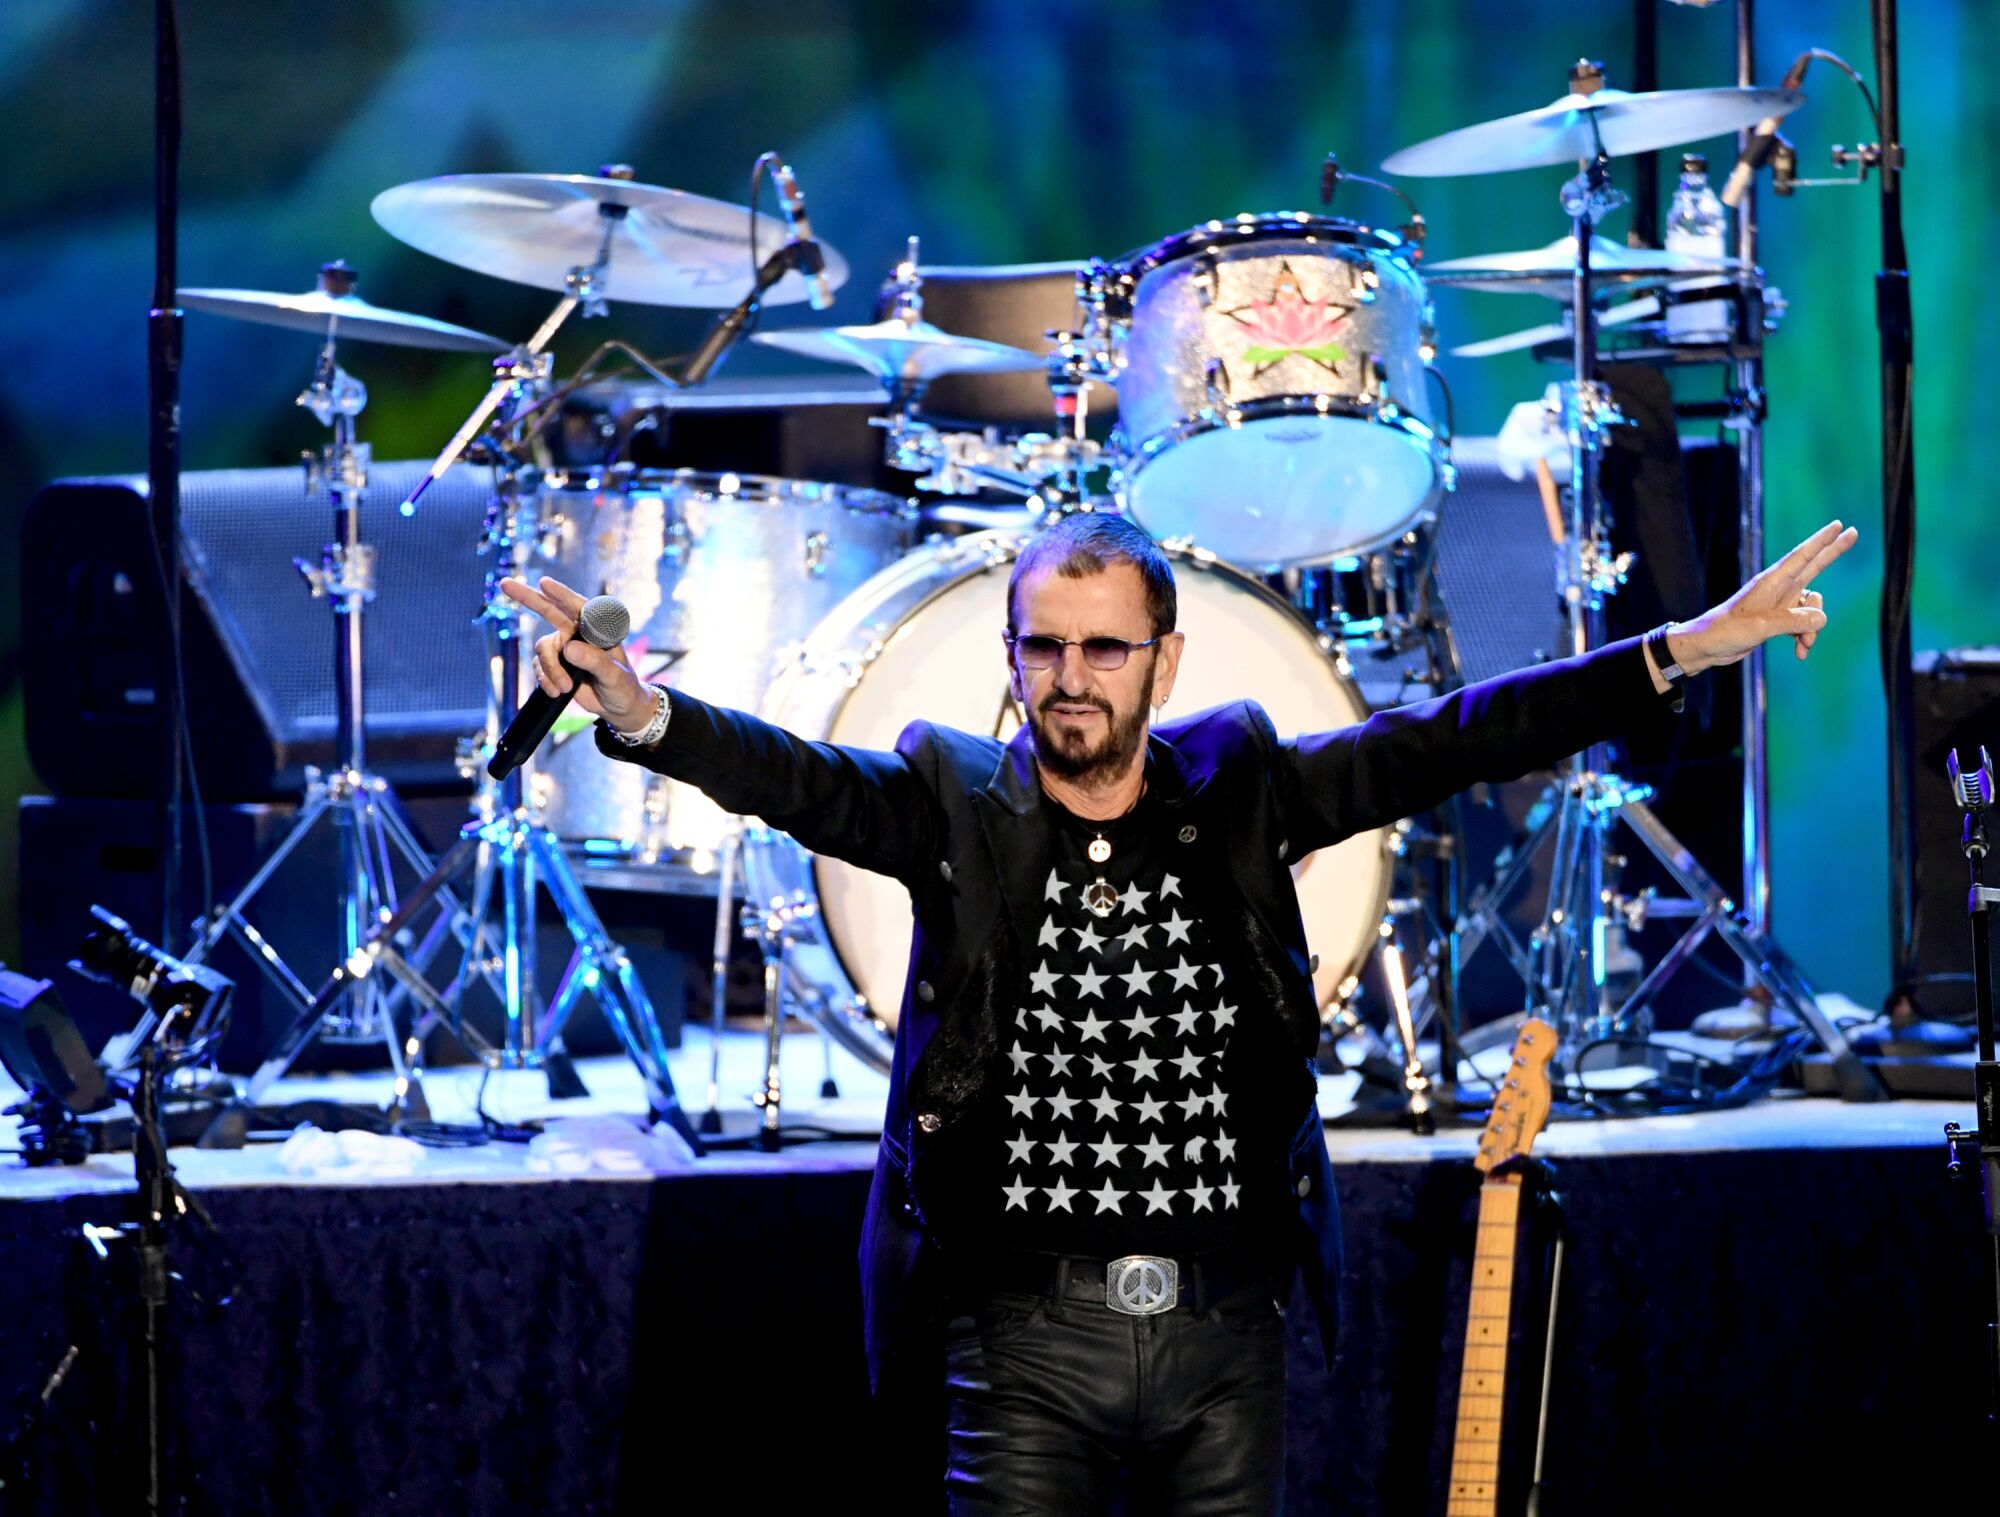 LOS ANGELES, CALIFORNIA - SEPTEMBER 01: Ringo Starr